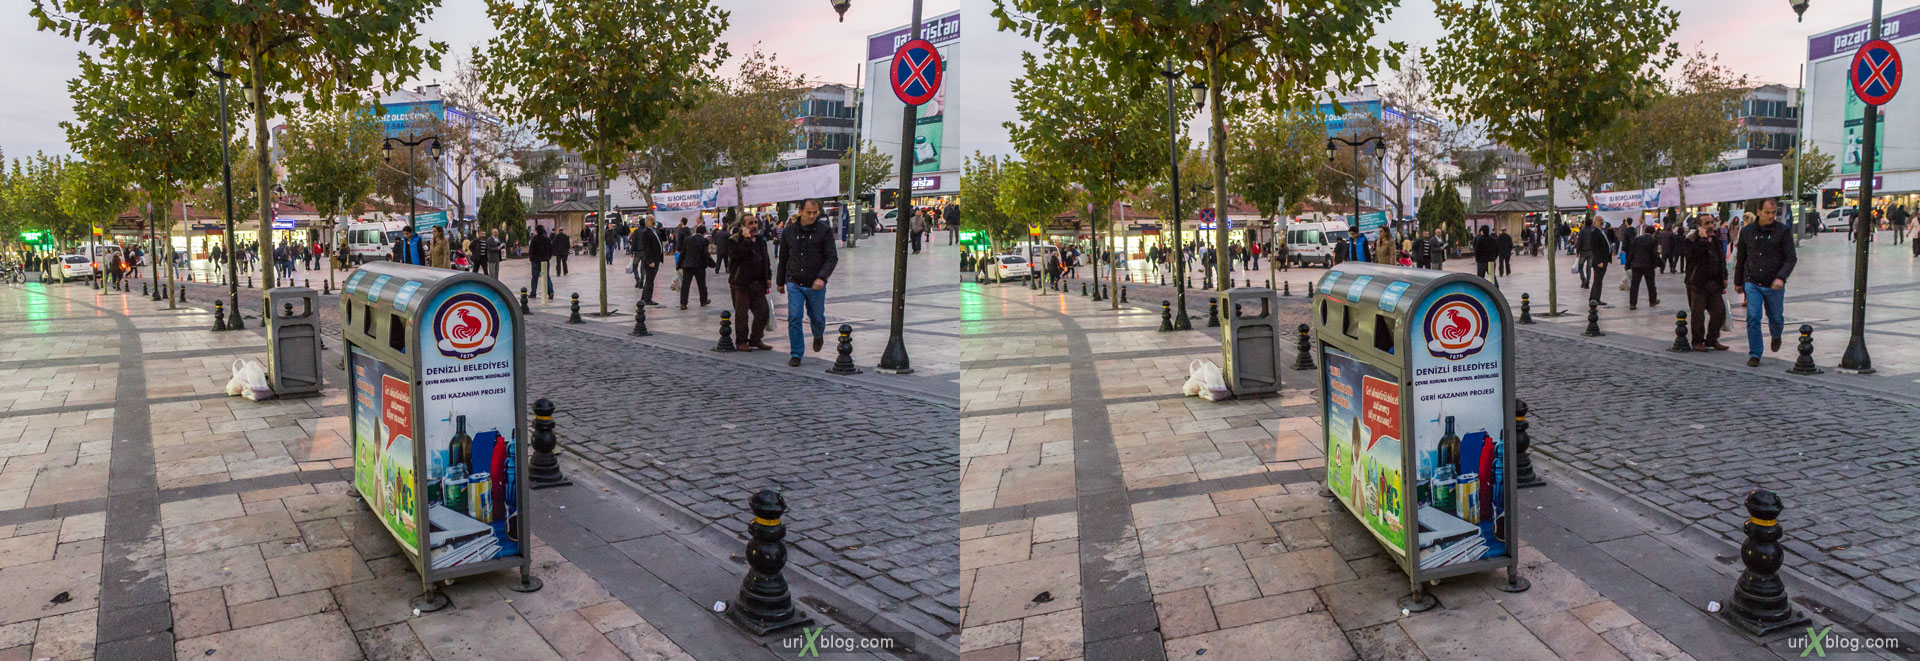 Denizli, Turkey, city, 3D, stereo pair, cross-eyed, crossview, cross view stereo pair, stereoscopic, 2014